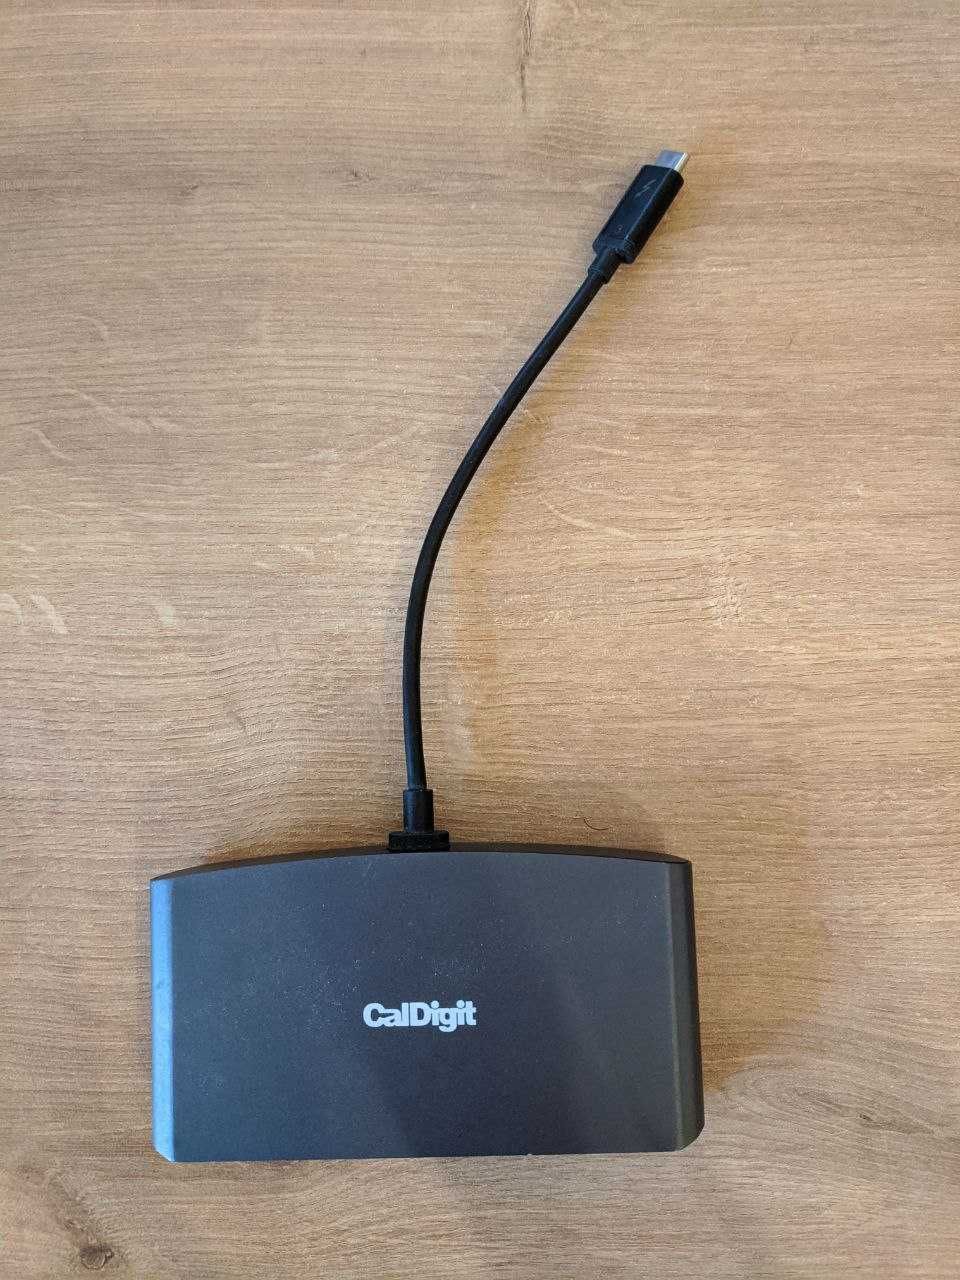 Caldigit Thunderbolt 3 Mini Dock док для макбука/ноутбука